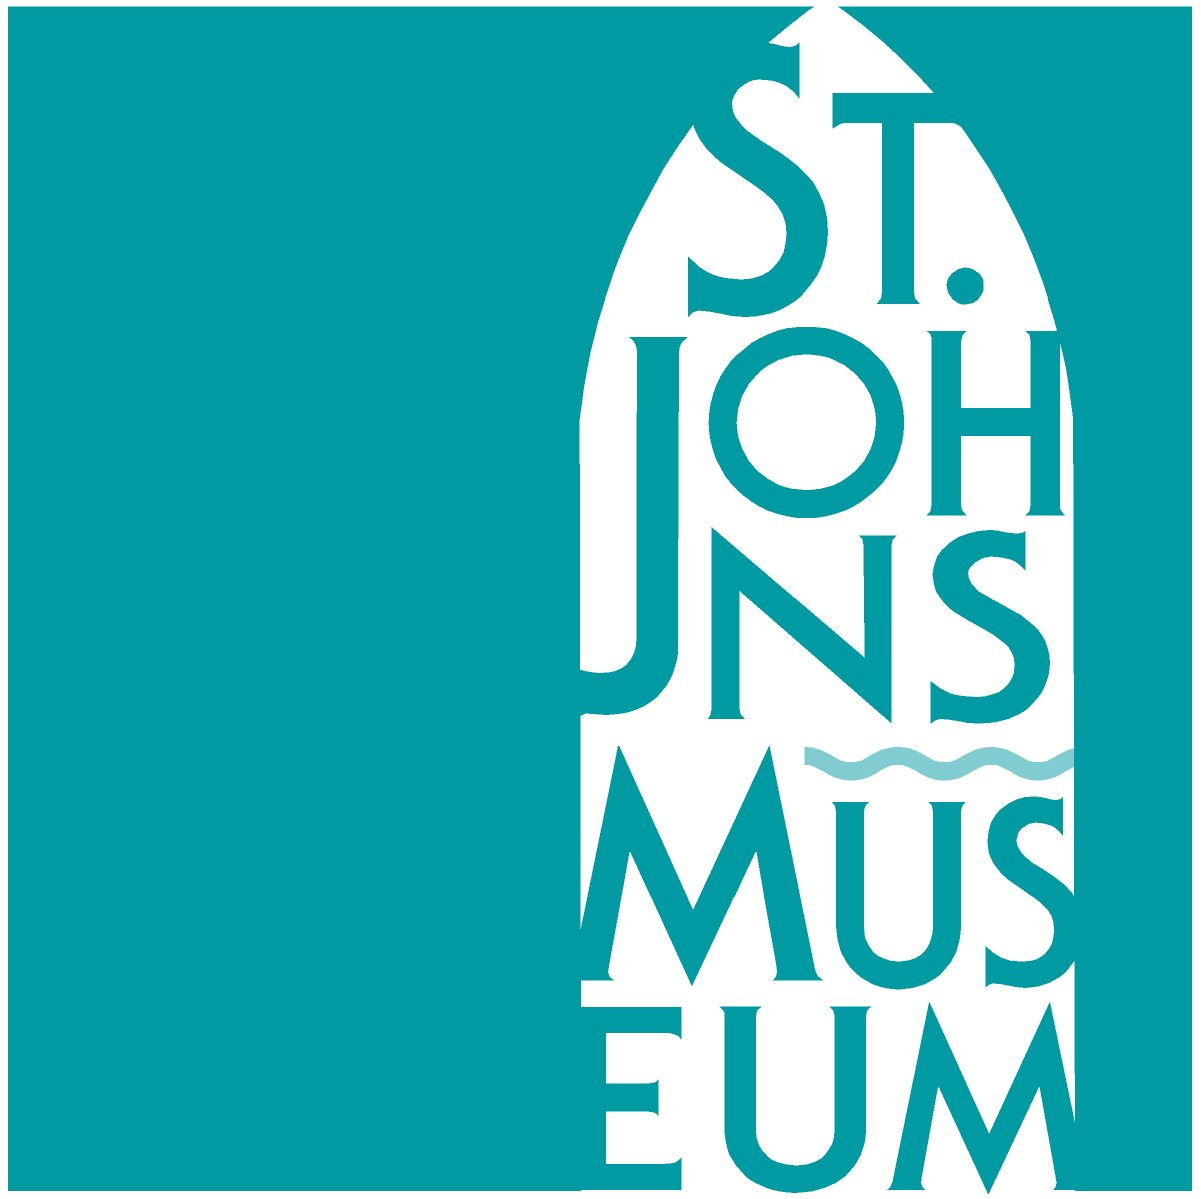 St. Johns Museum 